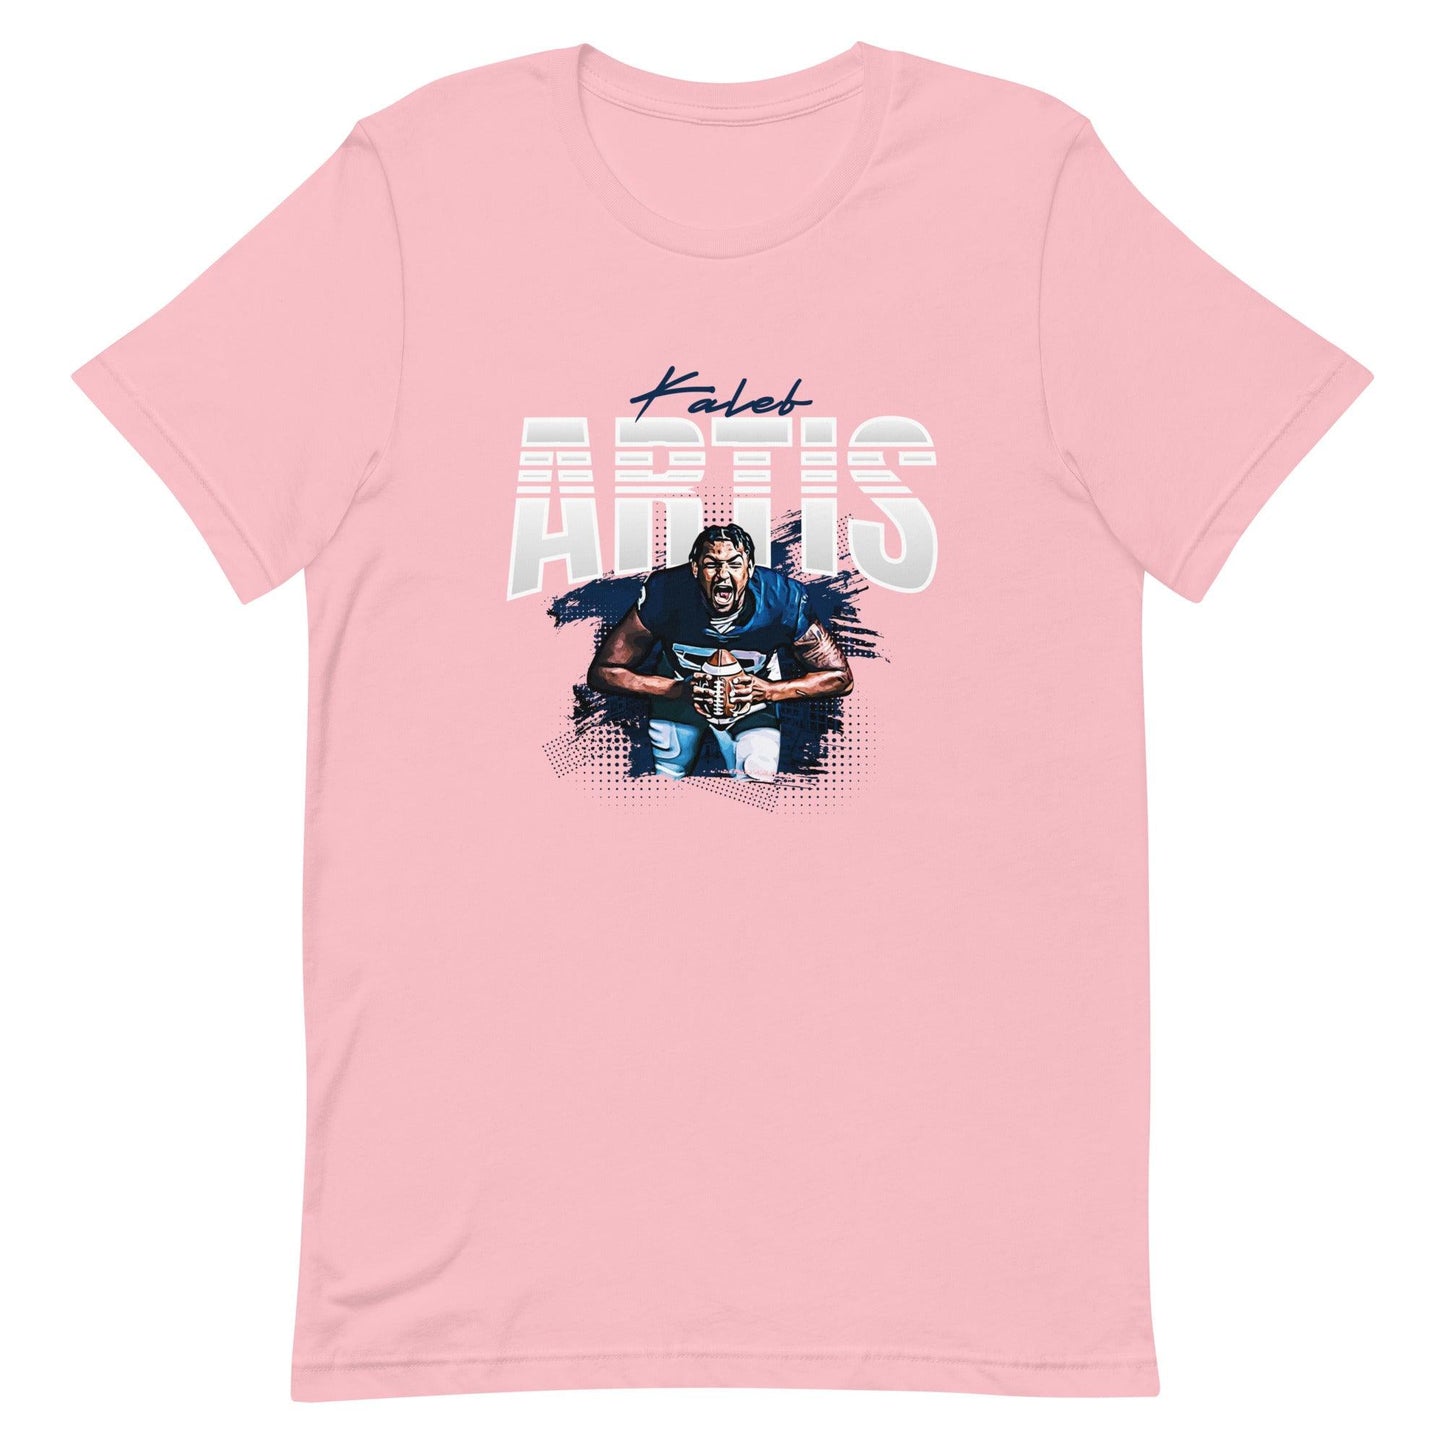 Kaleb Artis "Gameday" t-shirt - Fan Arch